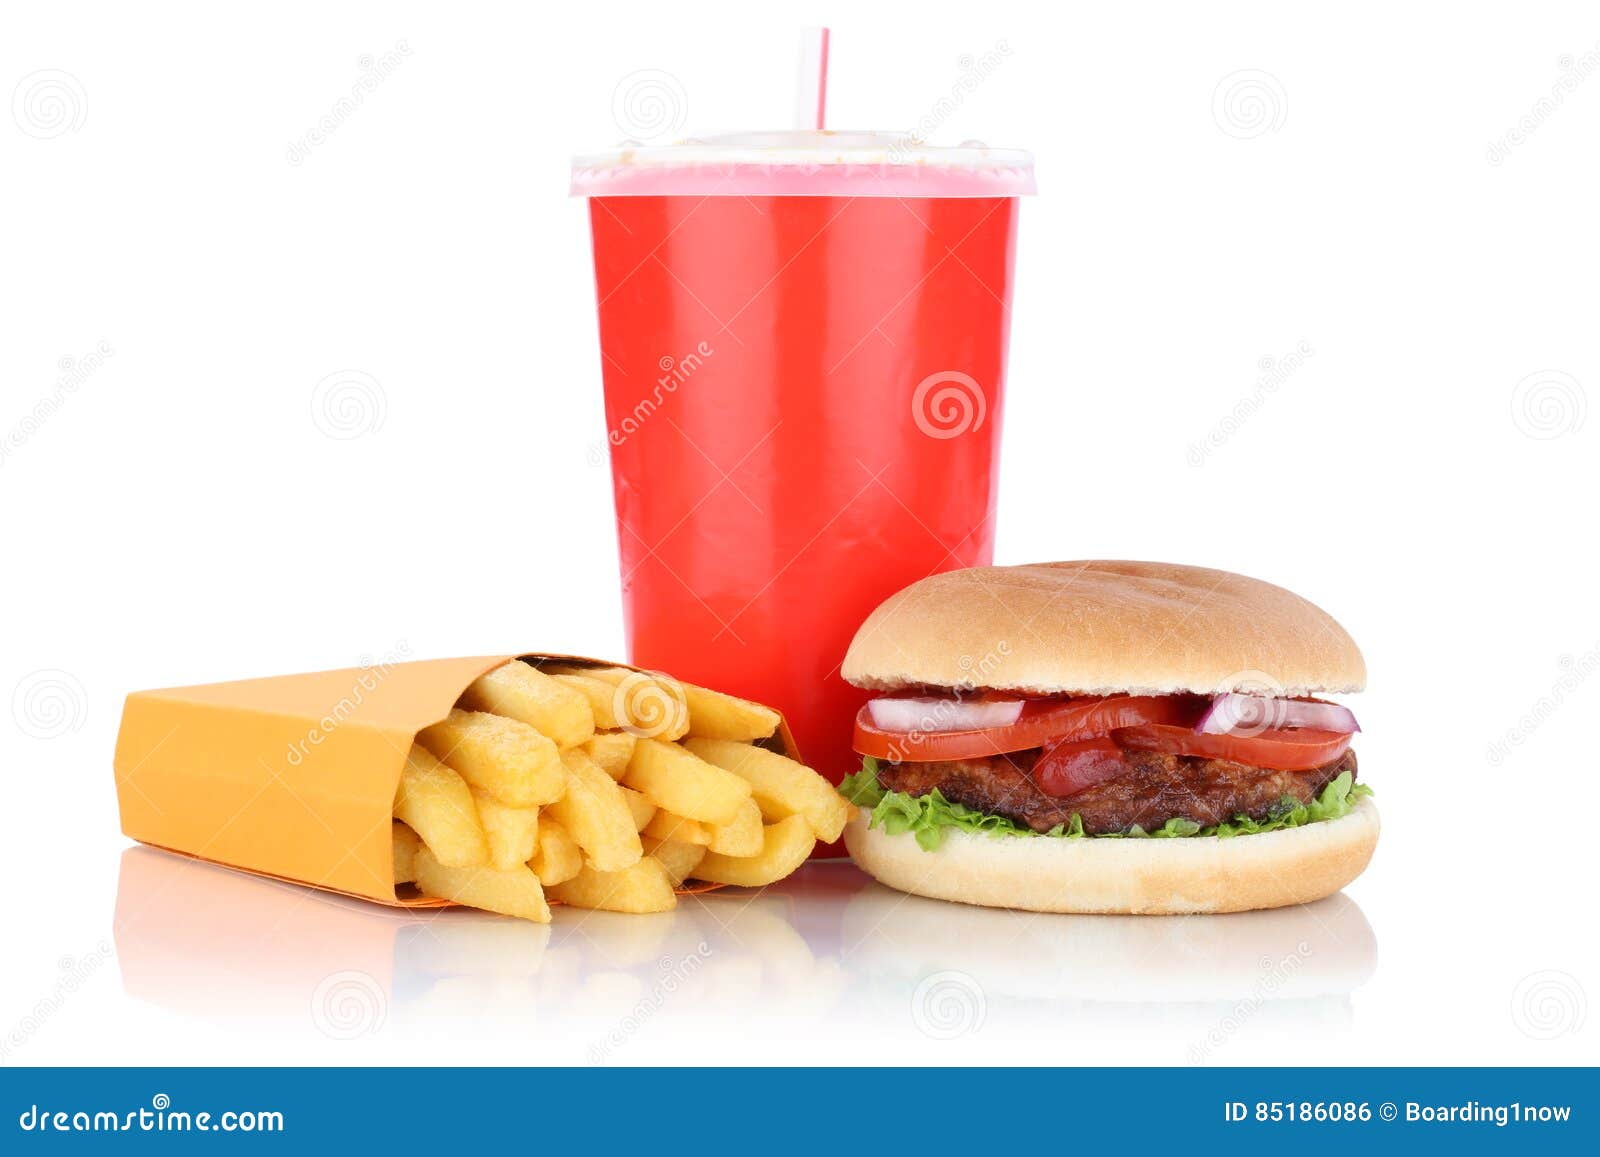 Hamburger and Fries Menu Meal Combo Fast Food Drink Stock Photo